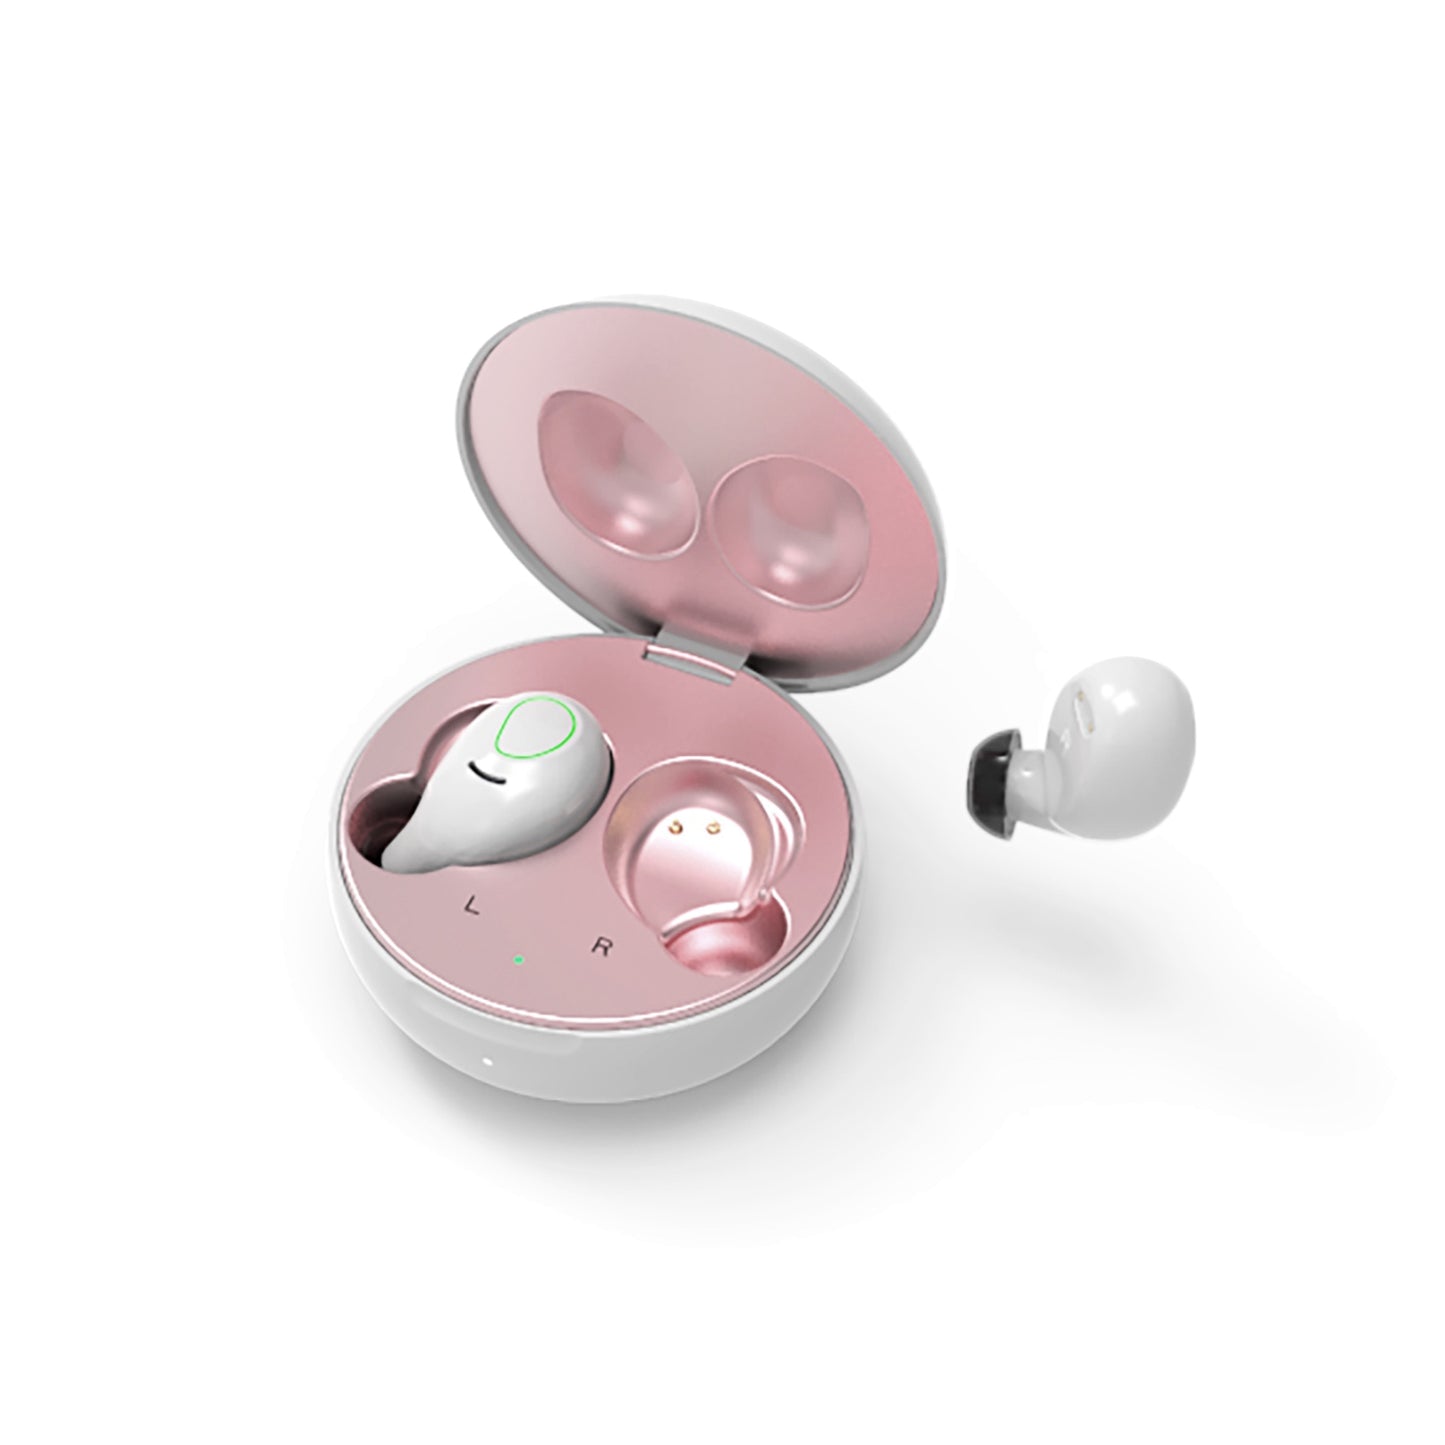 AIR ZEN 2.0 Pearl White and Rose Gold Earbuds (In Ear Wireless Headphones) - Grade C - Friendie Audio Pty Ltd